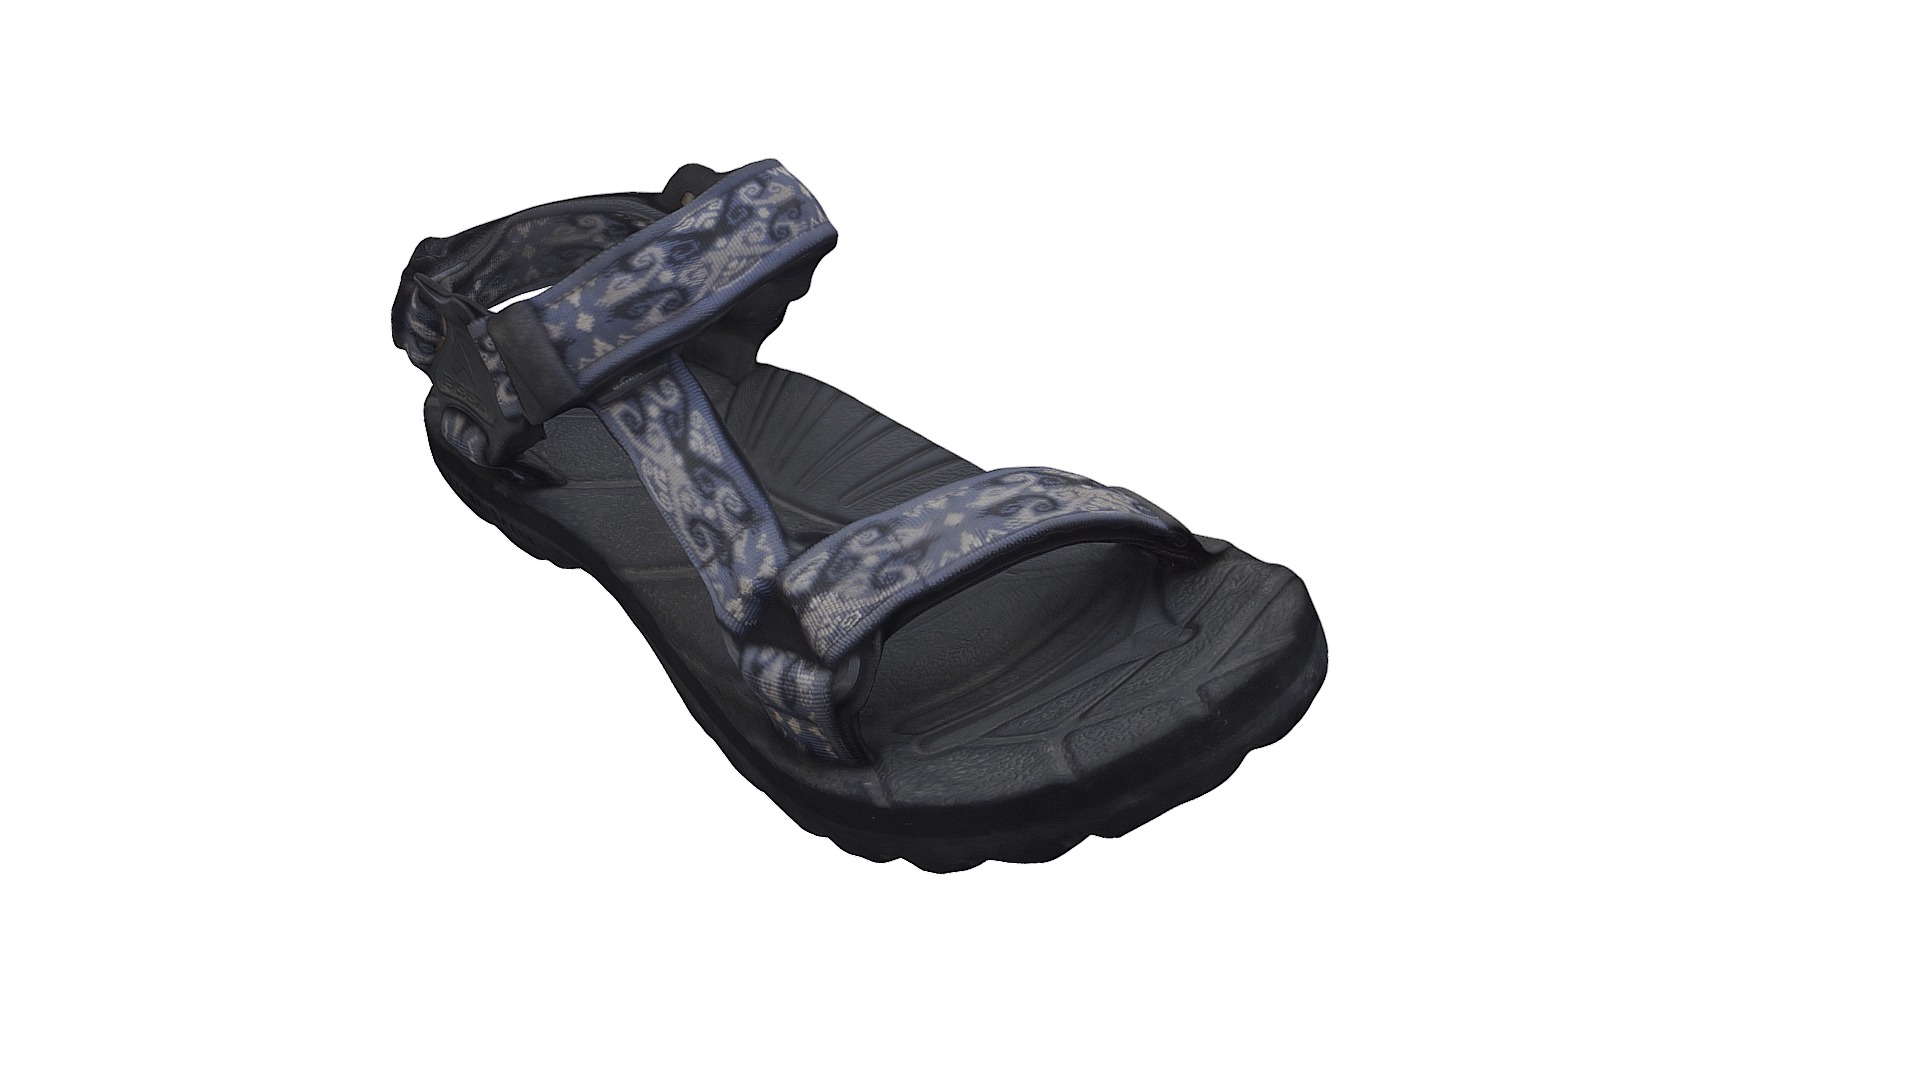 3D model Eiger Outdoor Sandal - This is a 3D model of the Eiger Outdoor Sandal. The 3D model is about a black leather shoe.